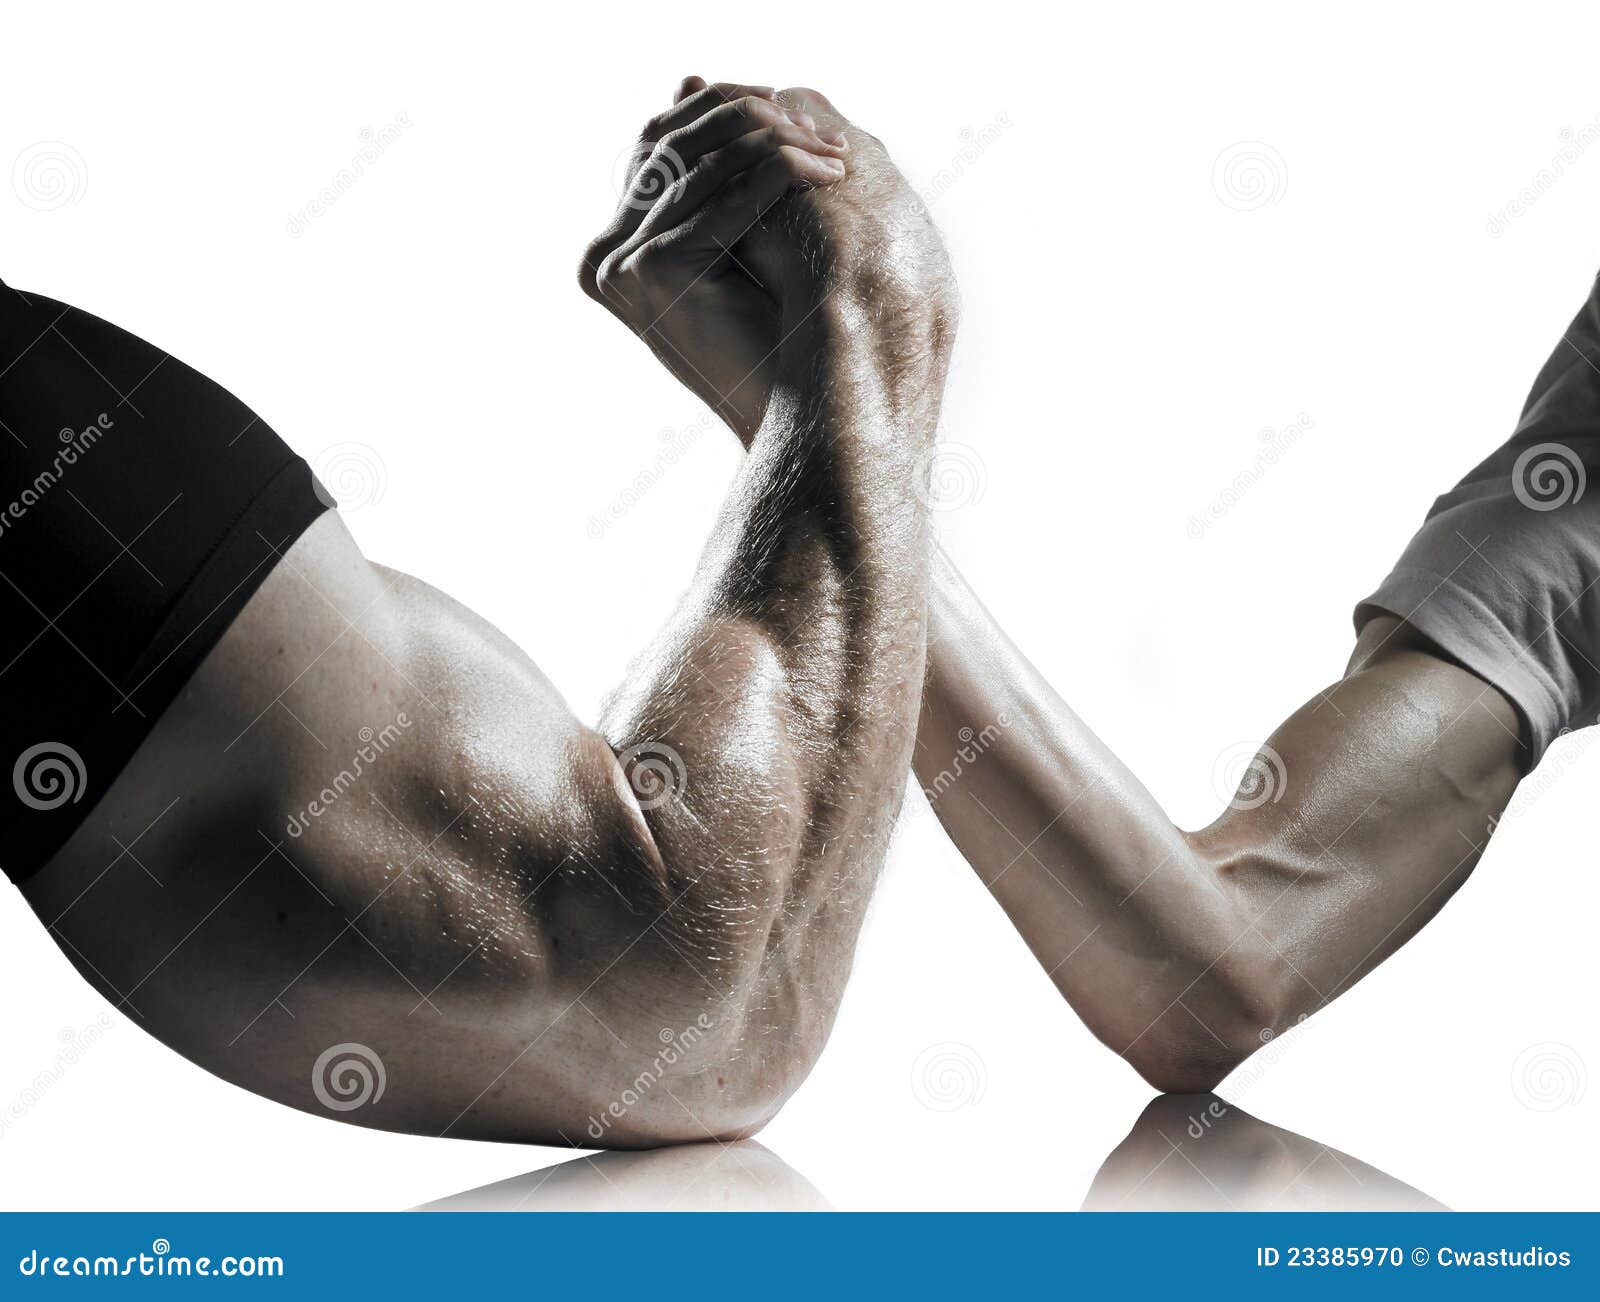 strong and weak men arm wrestling